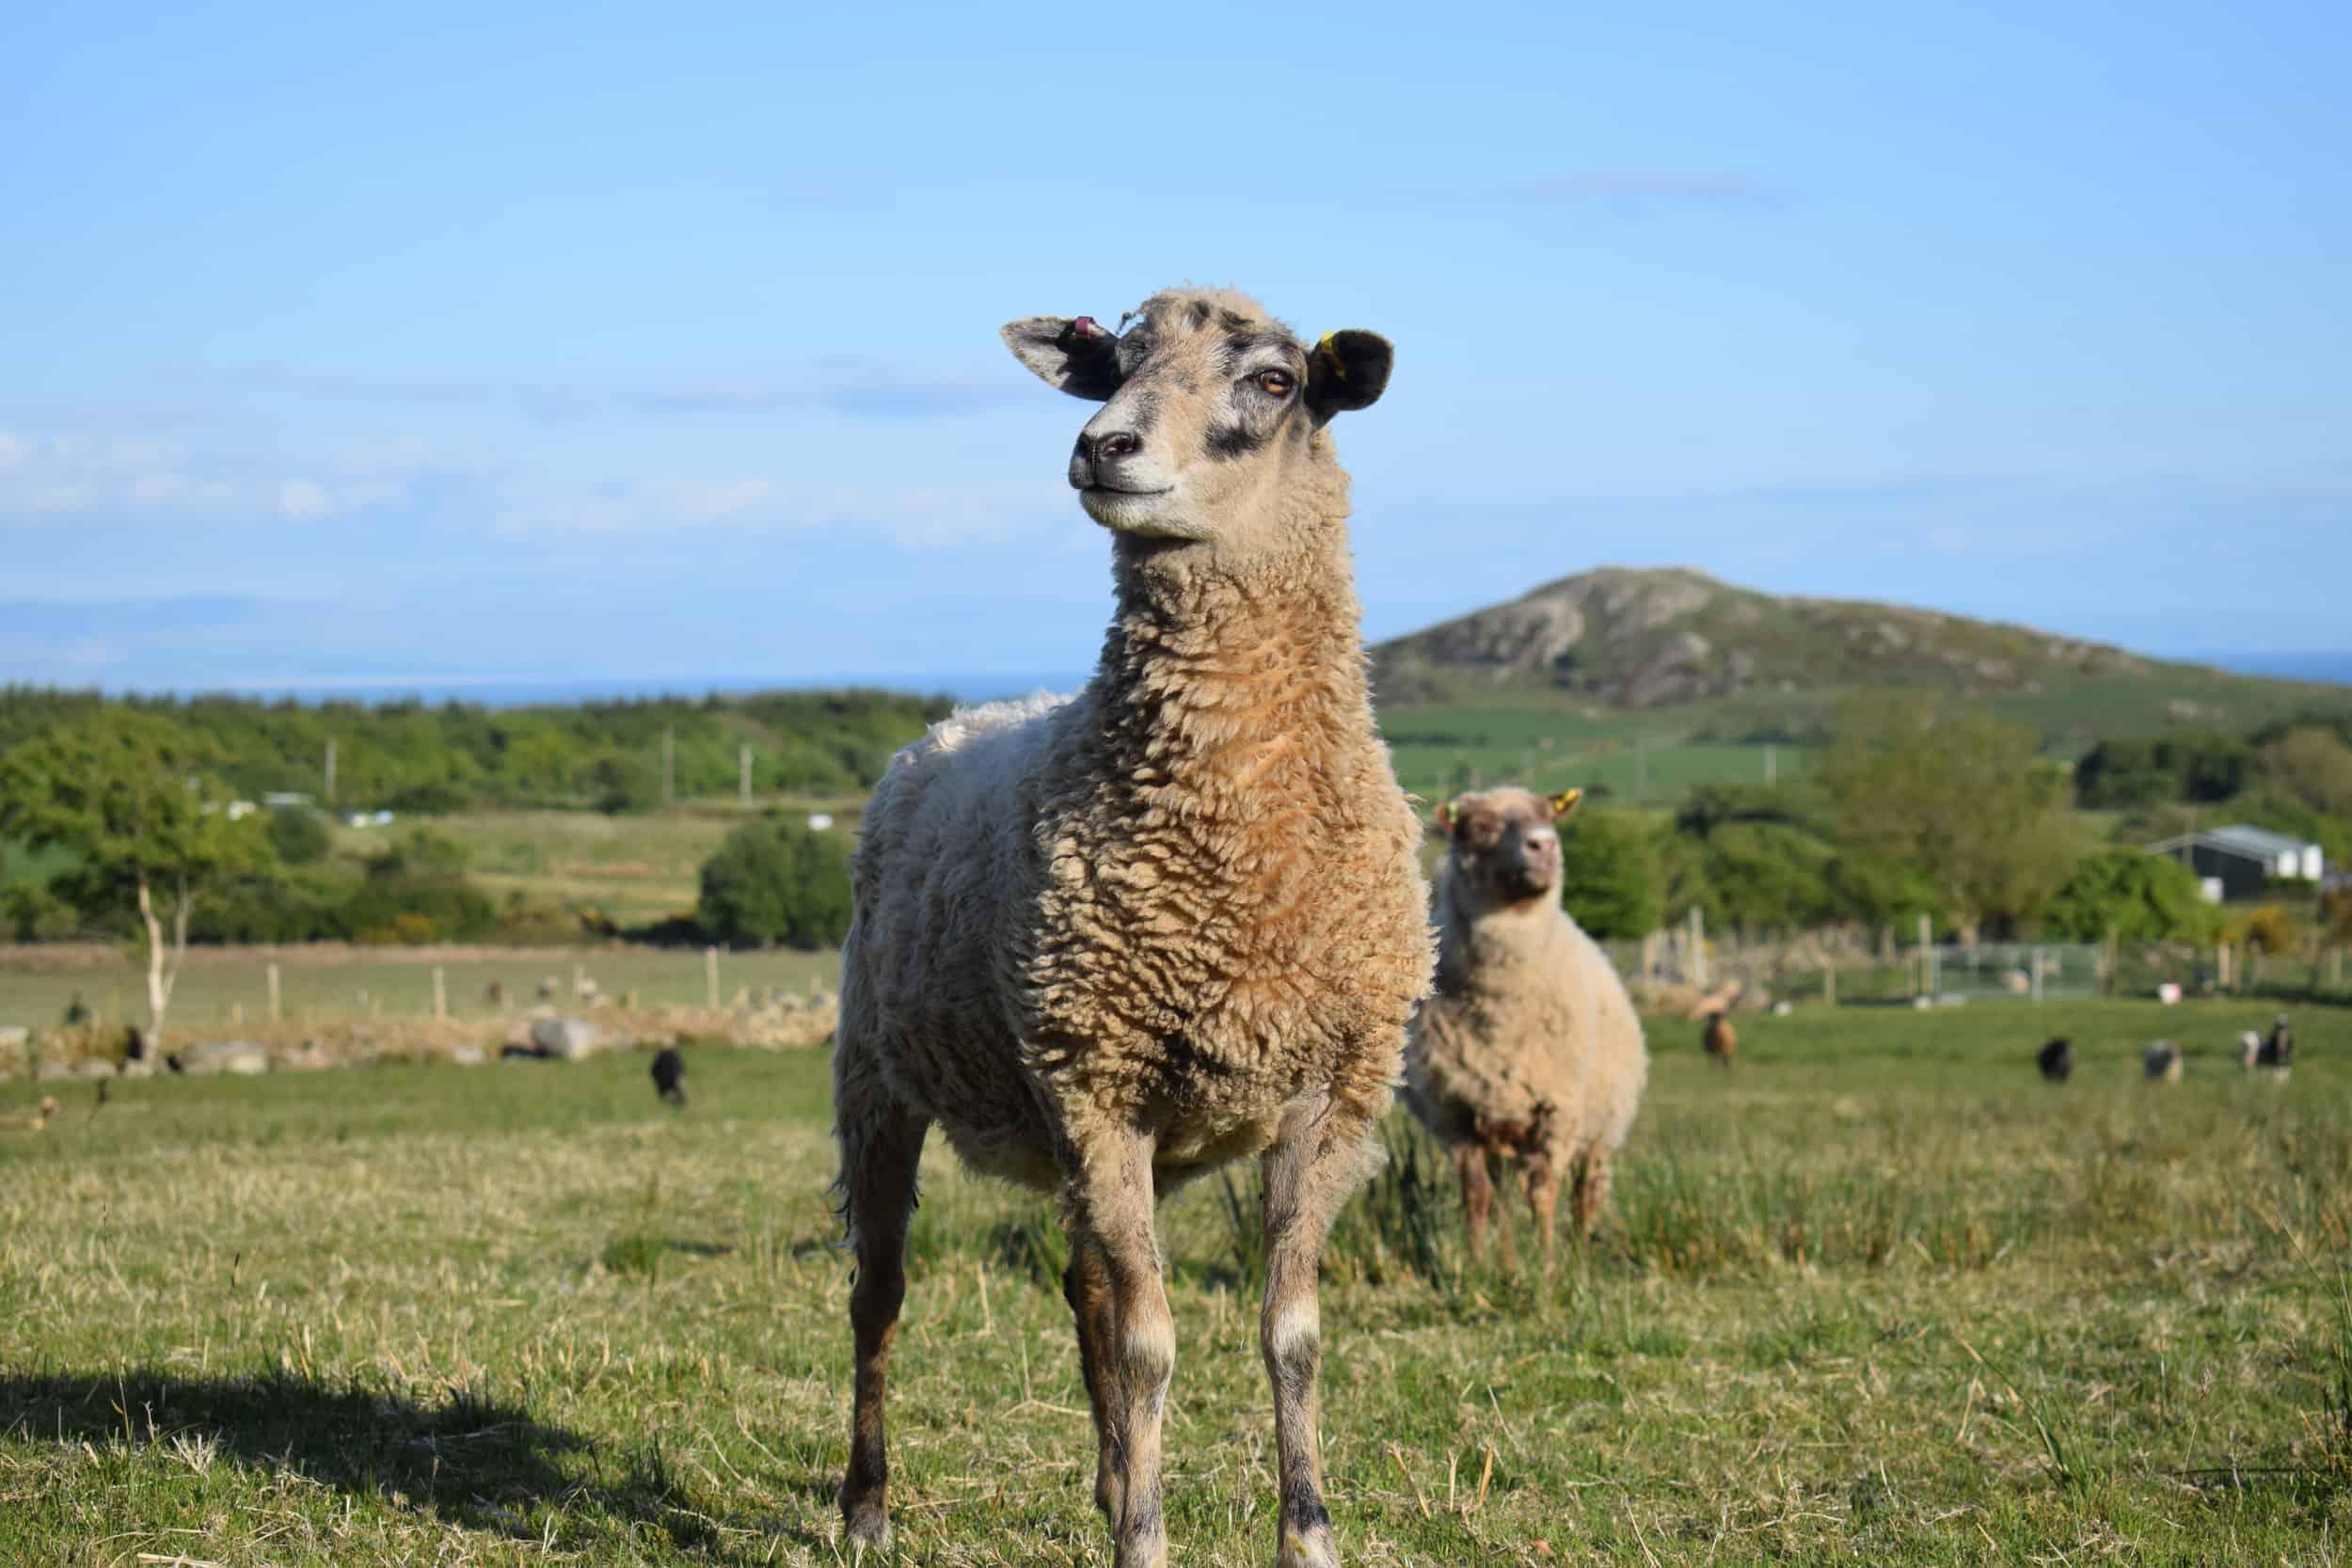 jemima crossbreed sheep beautiful ewe coloured leicester longwool cross gotland shetland sheep 2